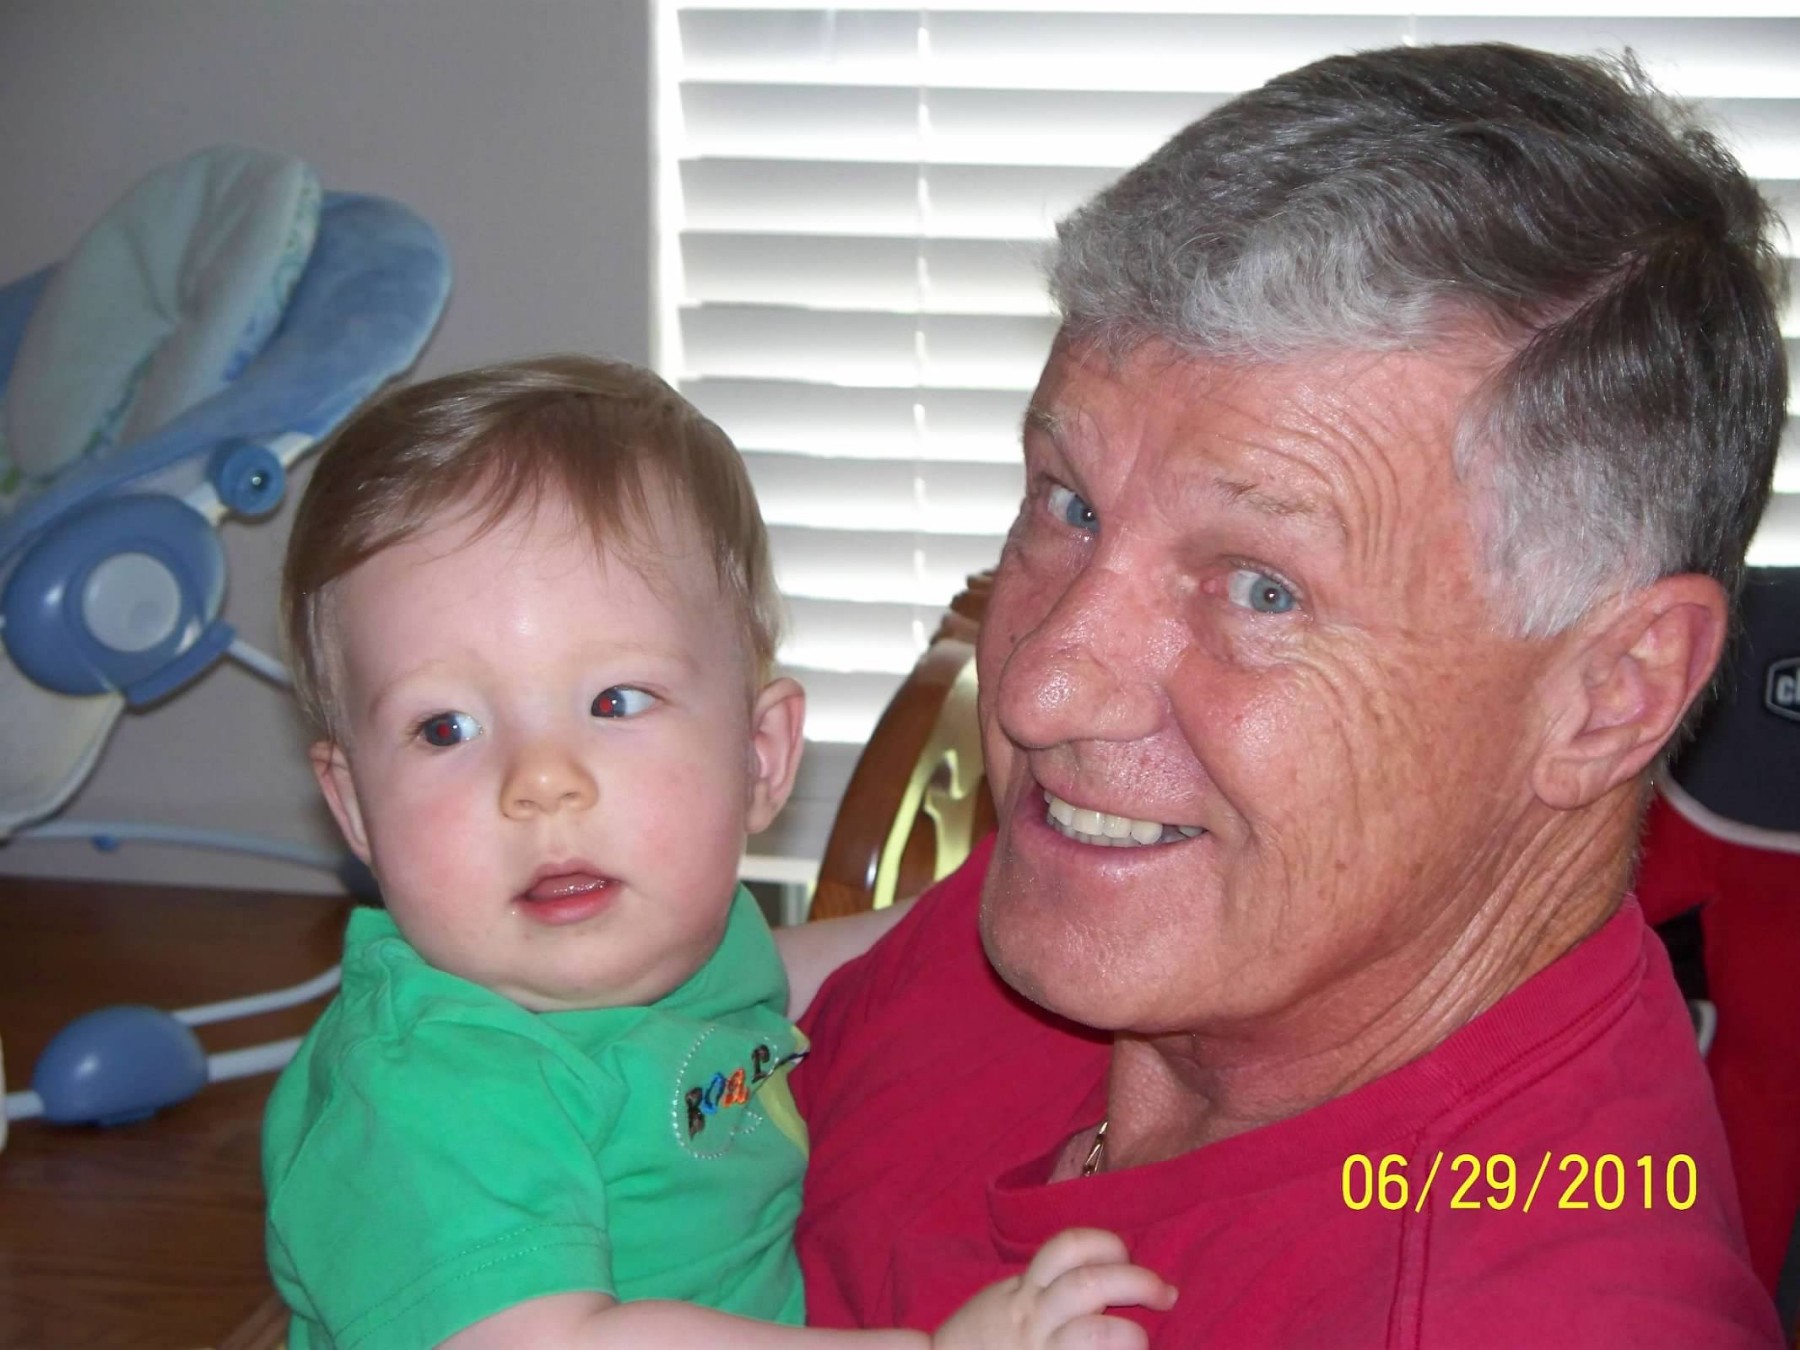 Dennis Edward Scott Obituary - Bentonville, AR